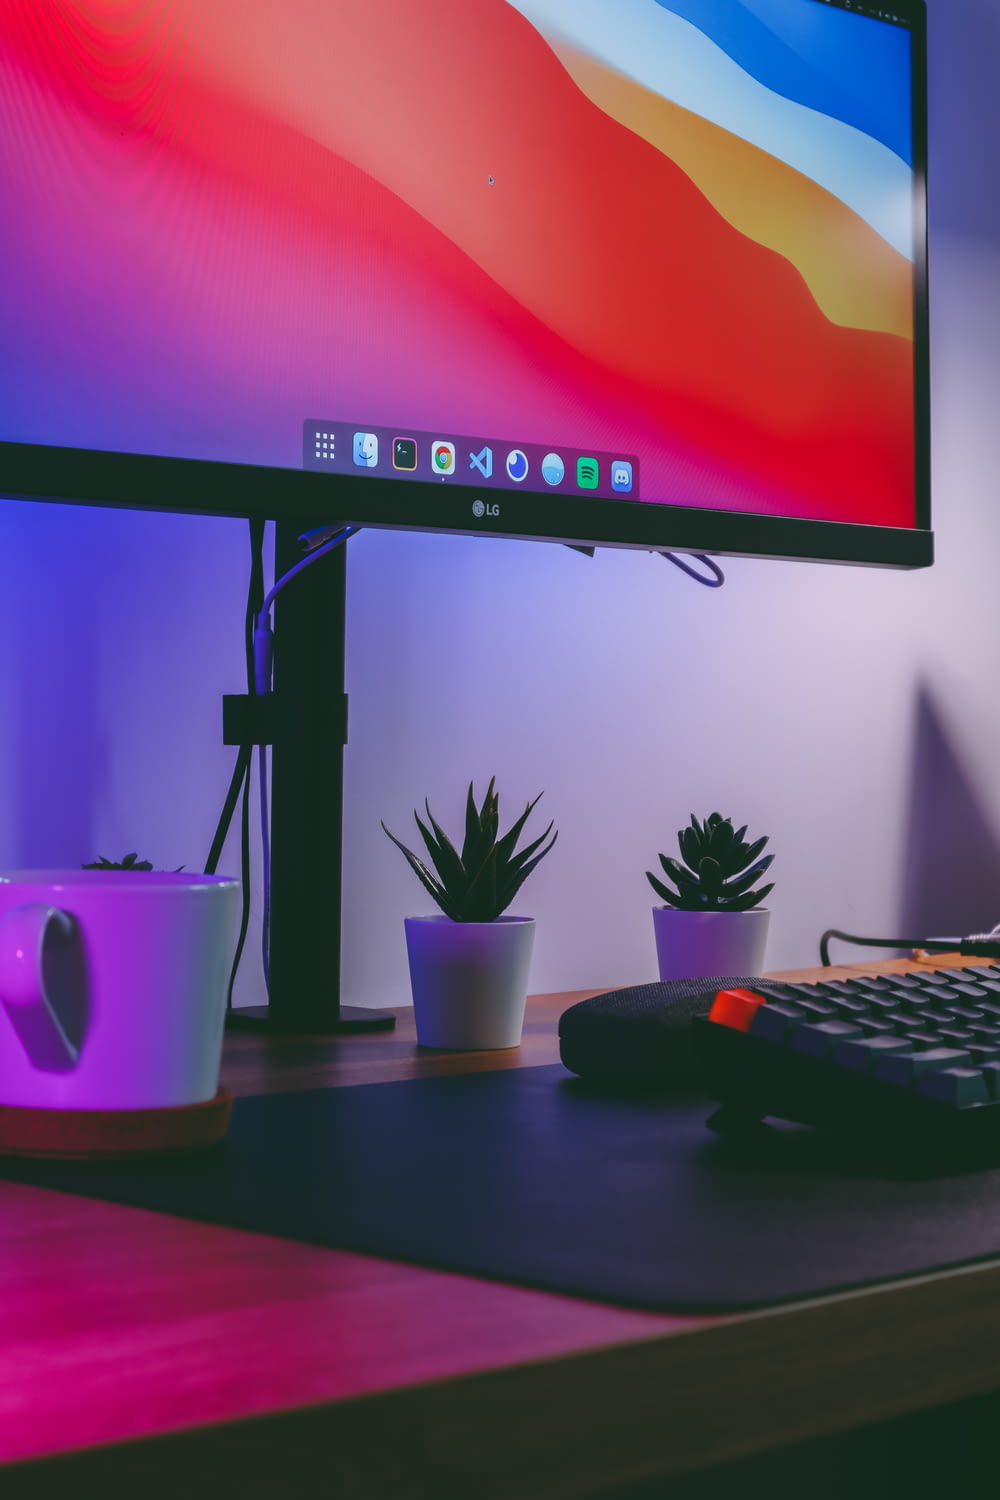 black flat screen computer monitor turned on beside purple ceramic mug